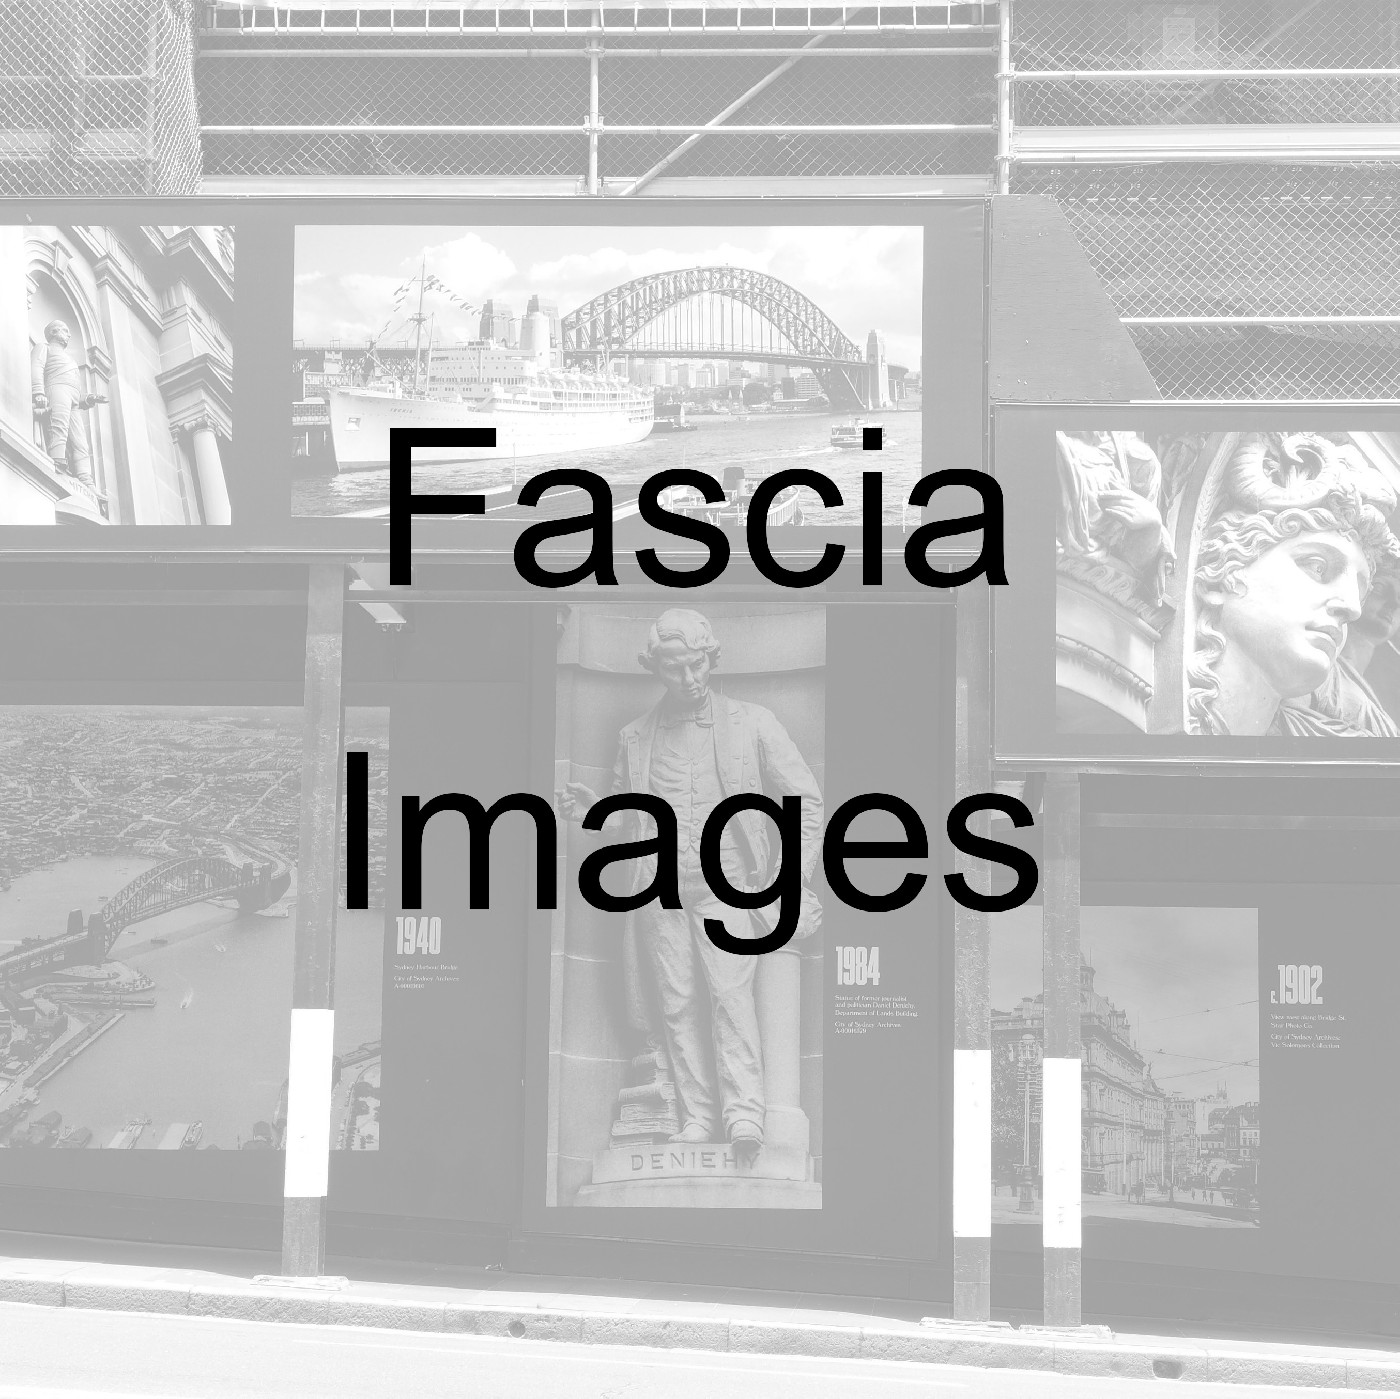 Ultimo - Fascia Images